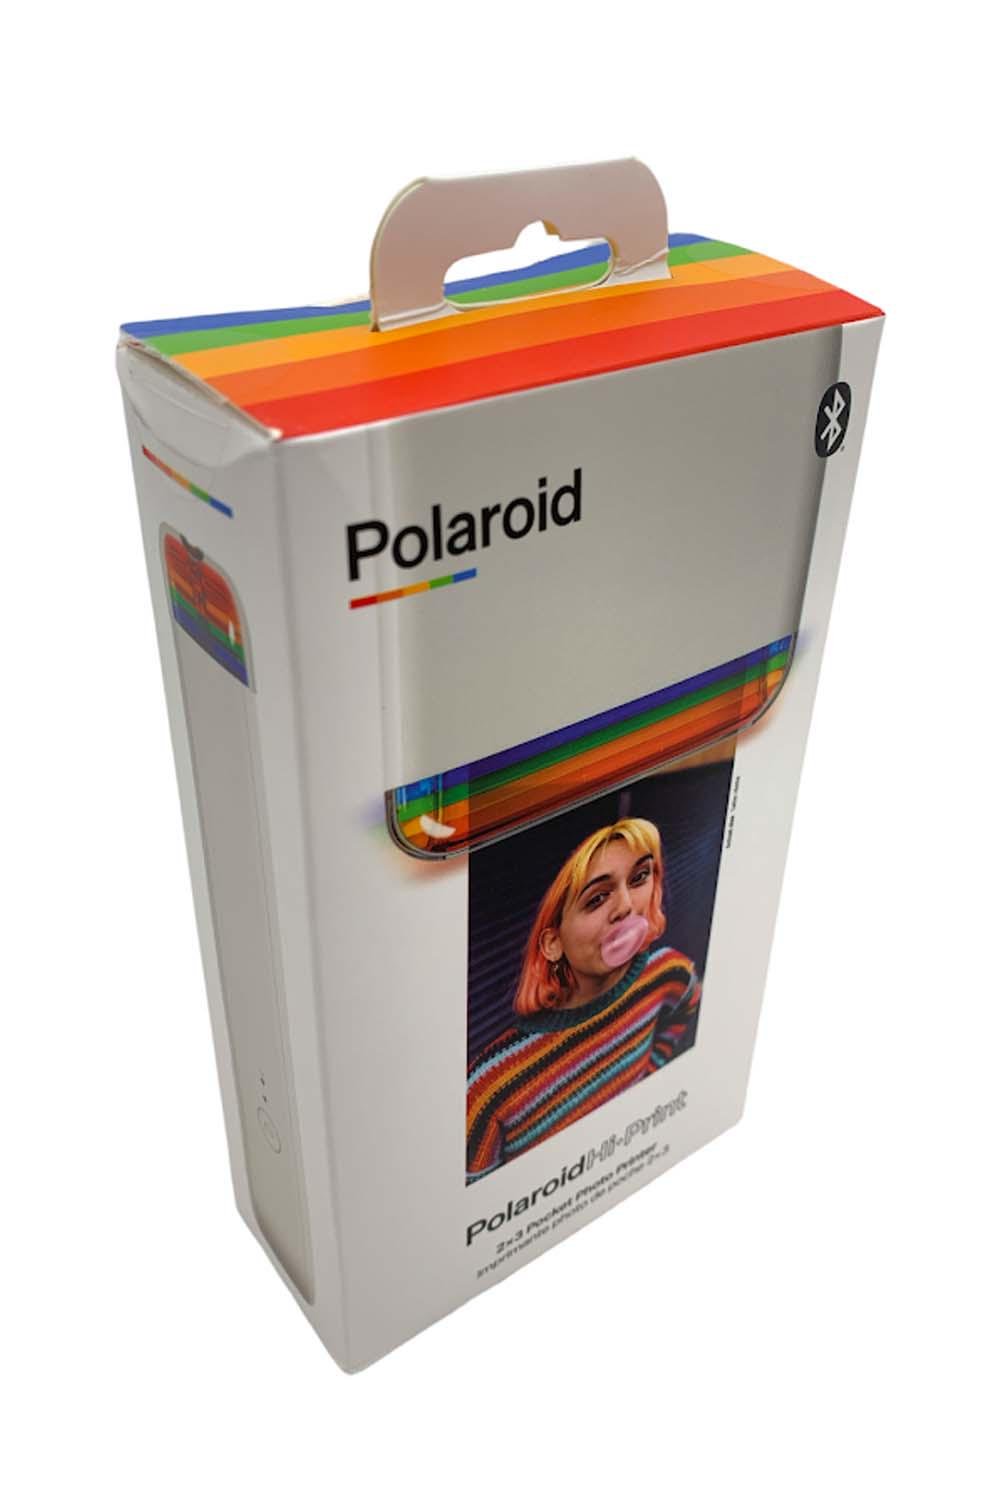 Polaroid Hi·Print 2x3 case  Polaroid, Case, Printers and accessories